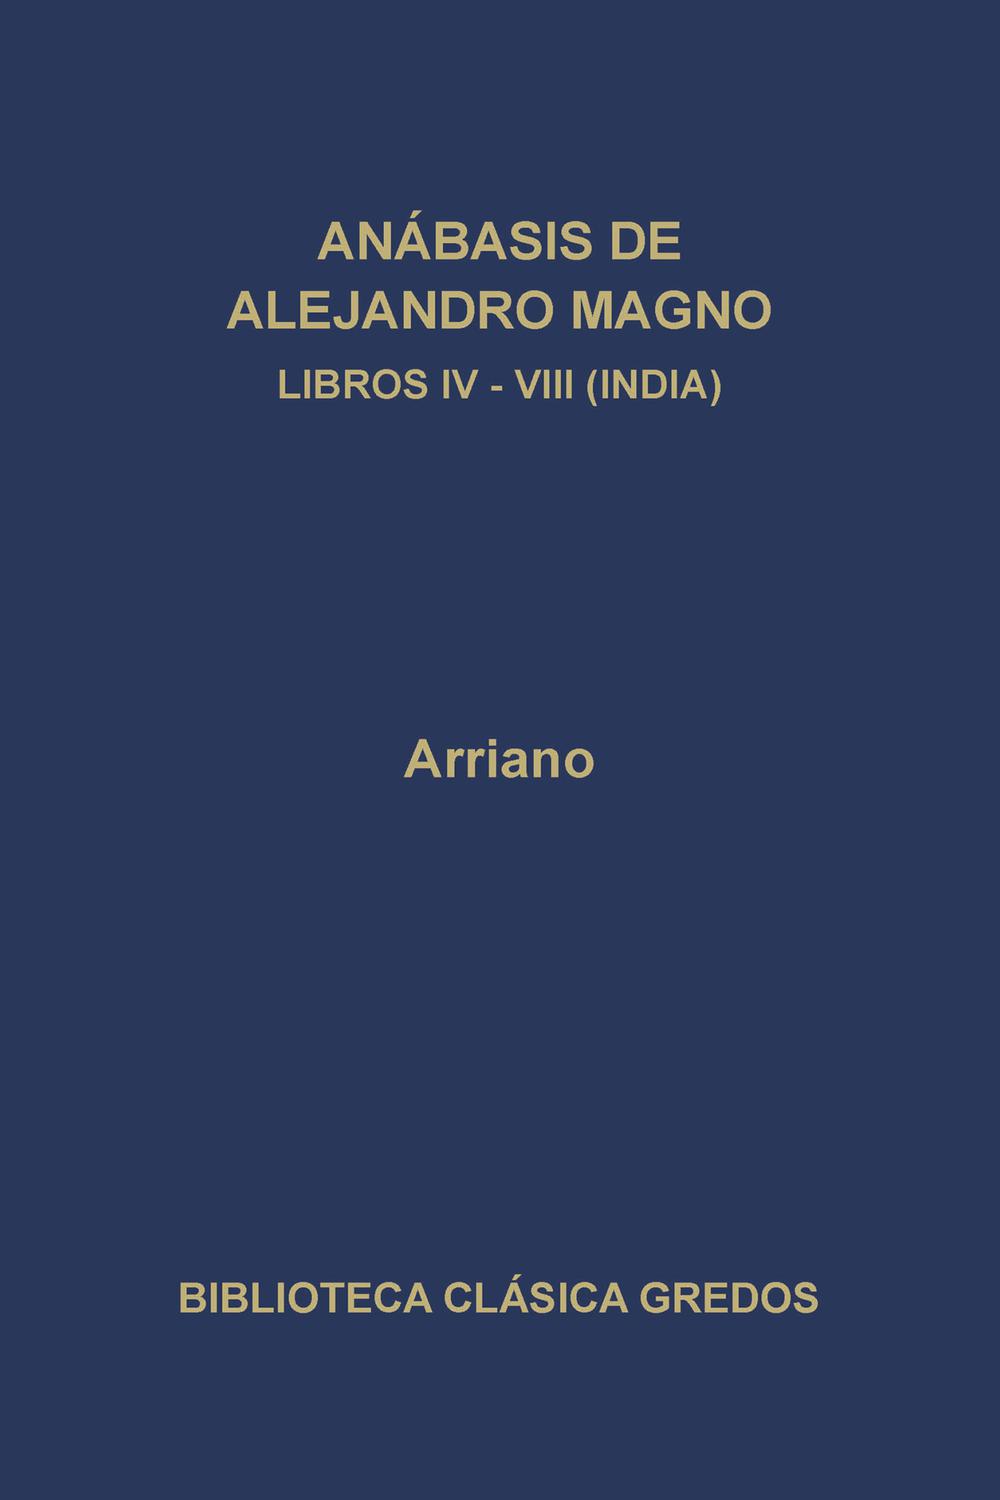 Anábasis de Alejandro Magno. Libros IV-VIII (India) - Arriano, Antonio Guzmán Guerra, Aurelior Pérez Jiménez